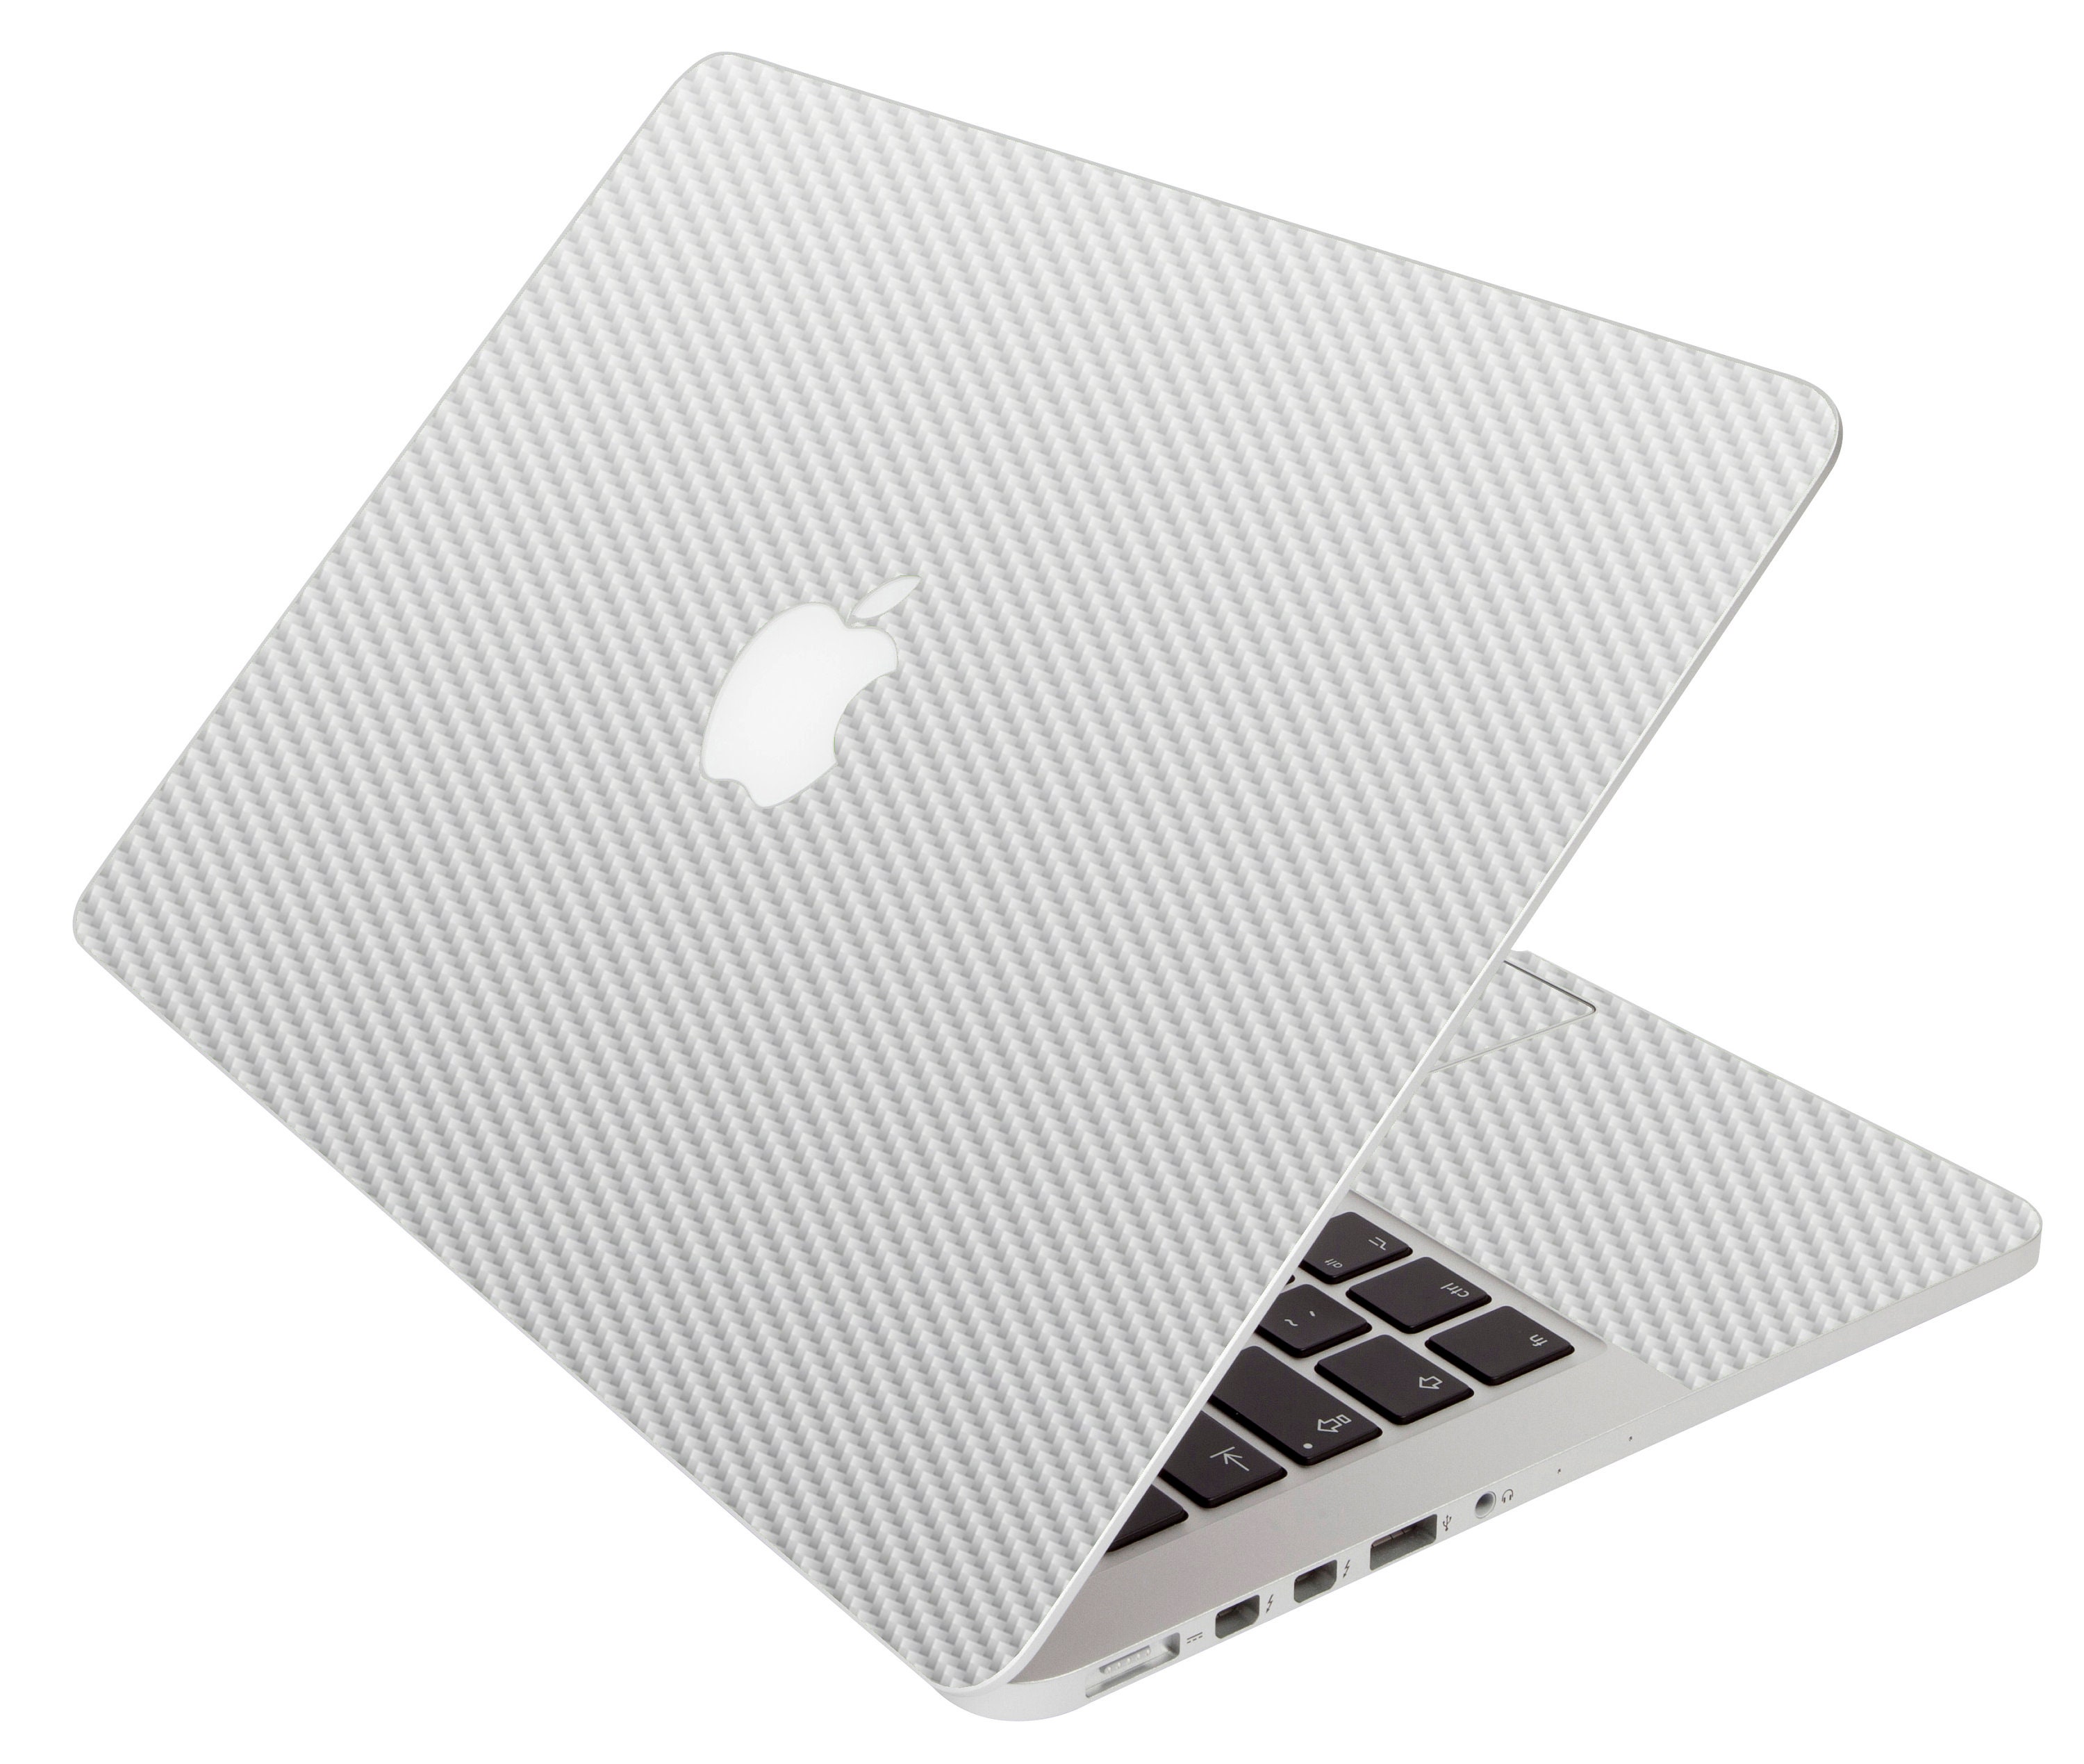 Carbon Fiber Sticker Skin Cover Guard Screen Protector for MacBook Pro 15 A1398 